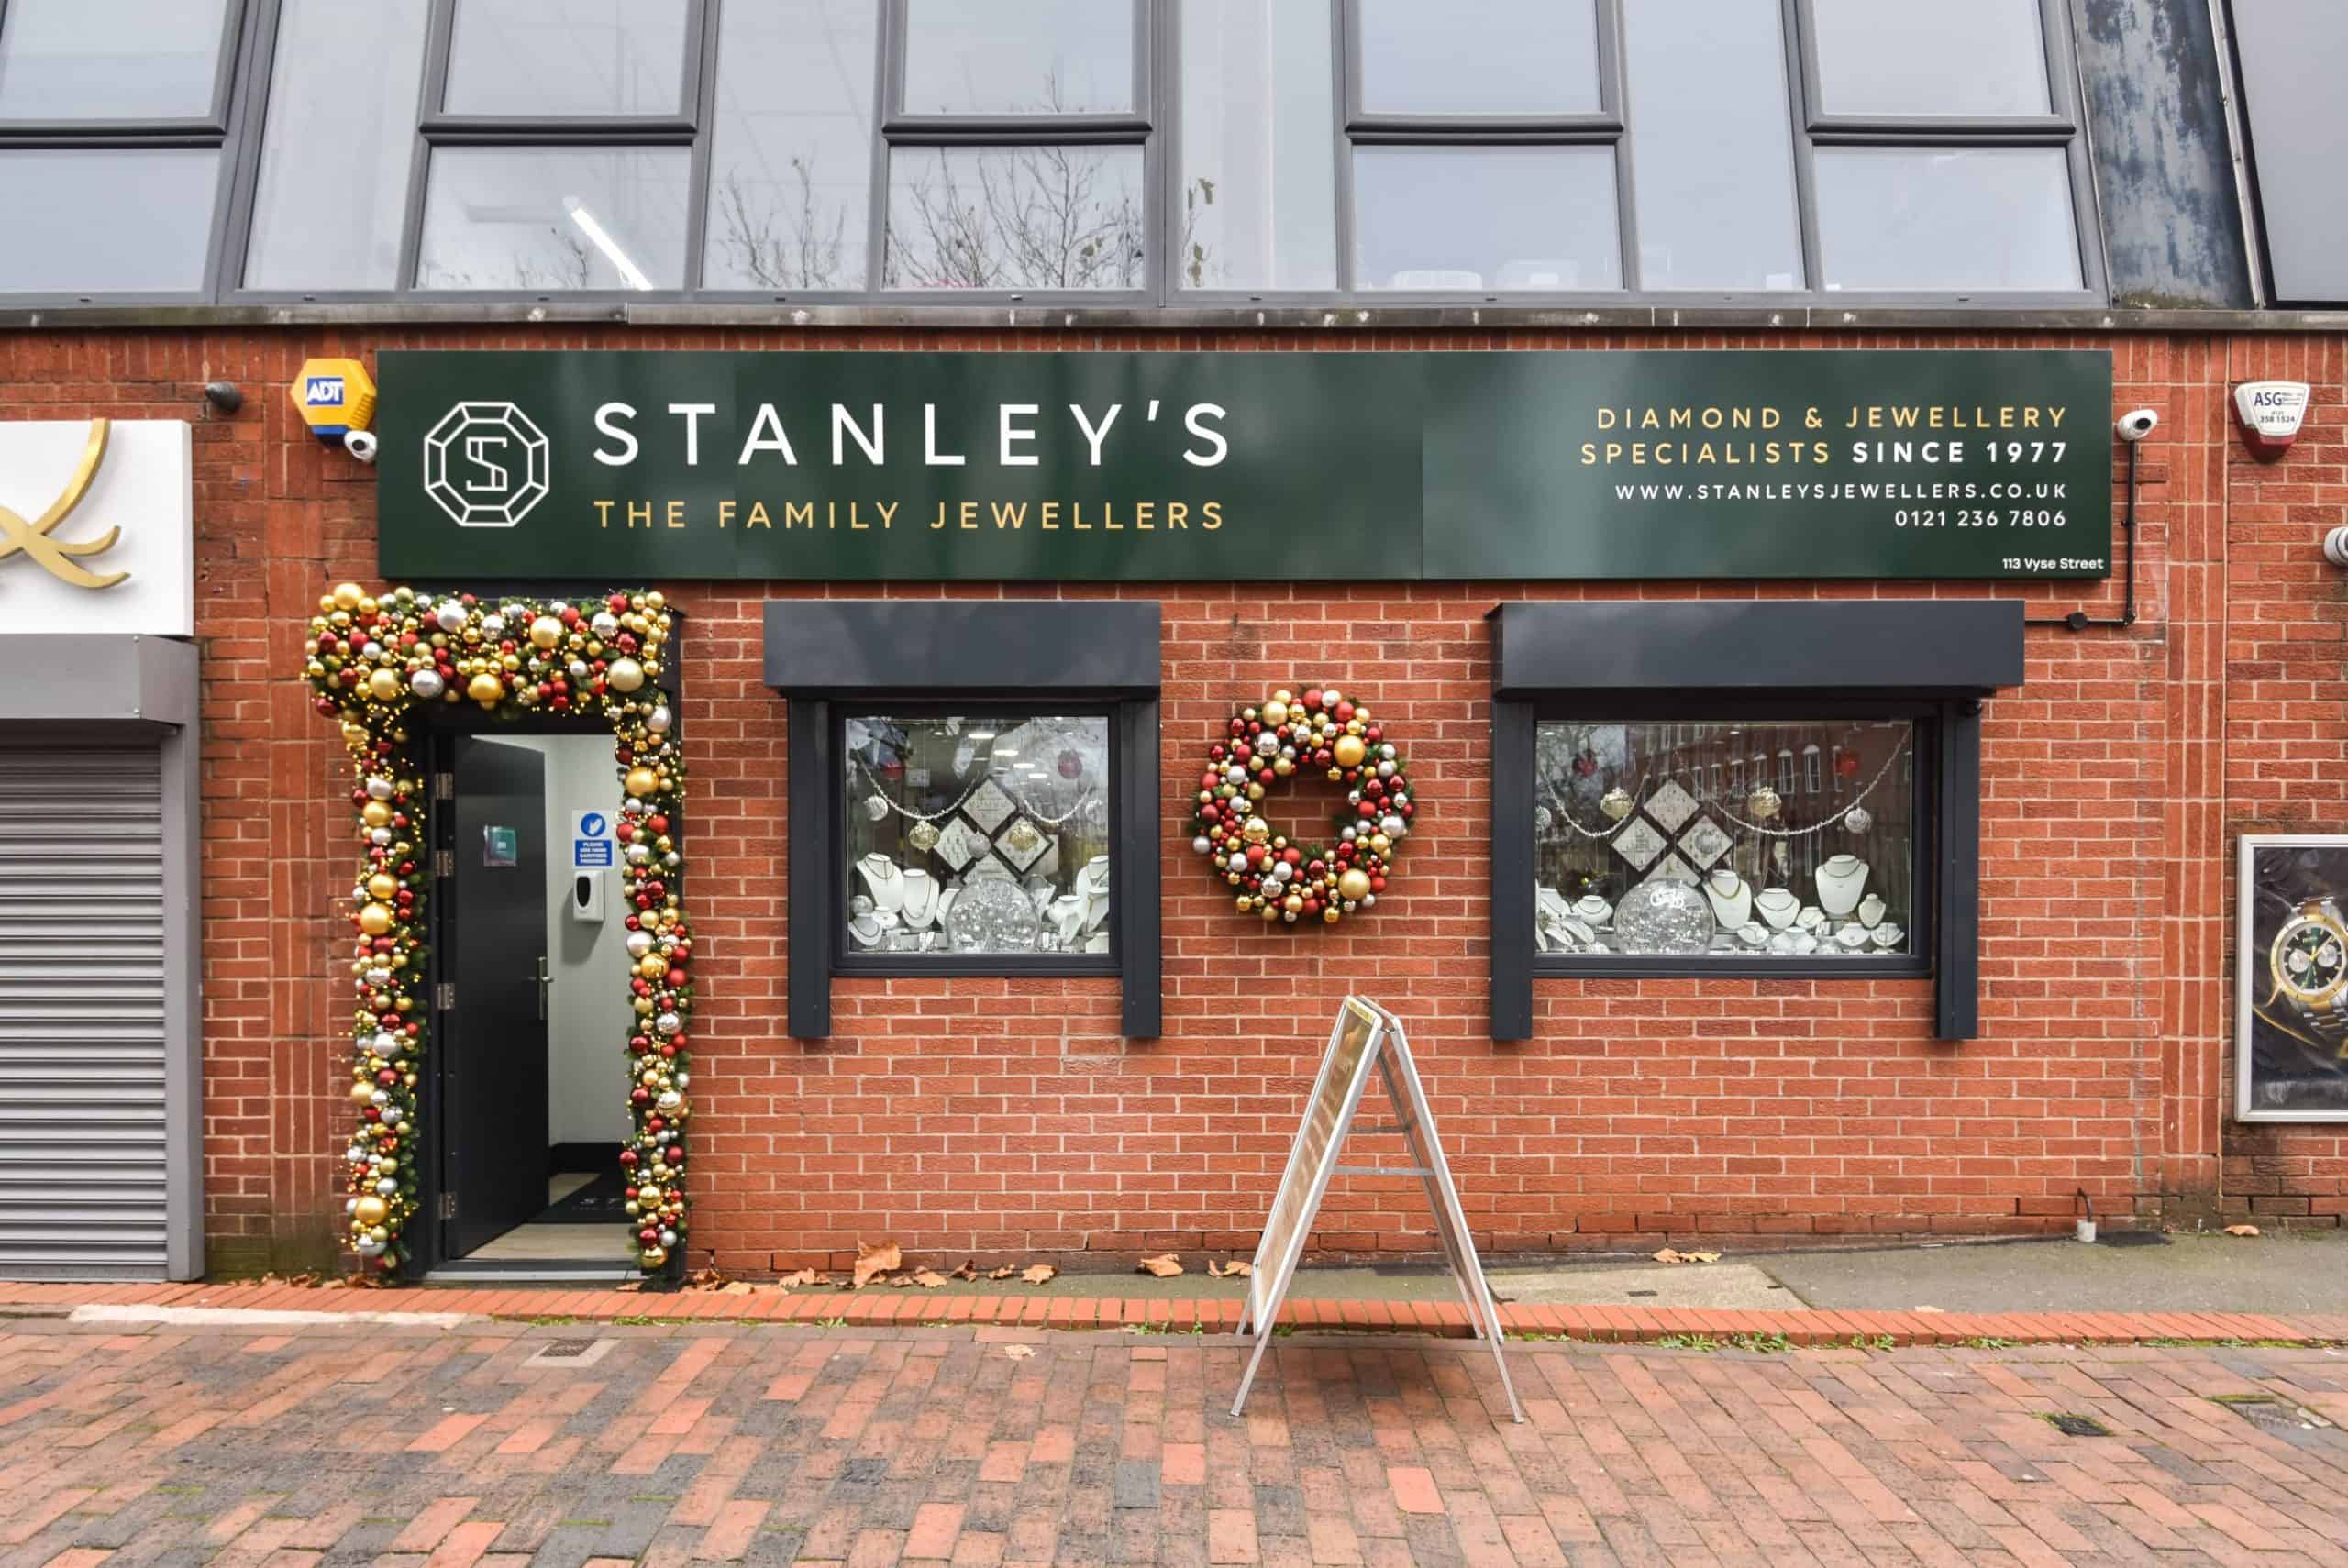 76. Stanley's